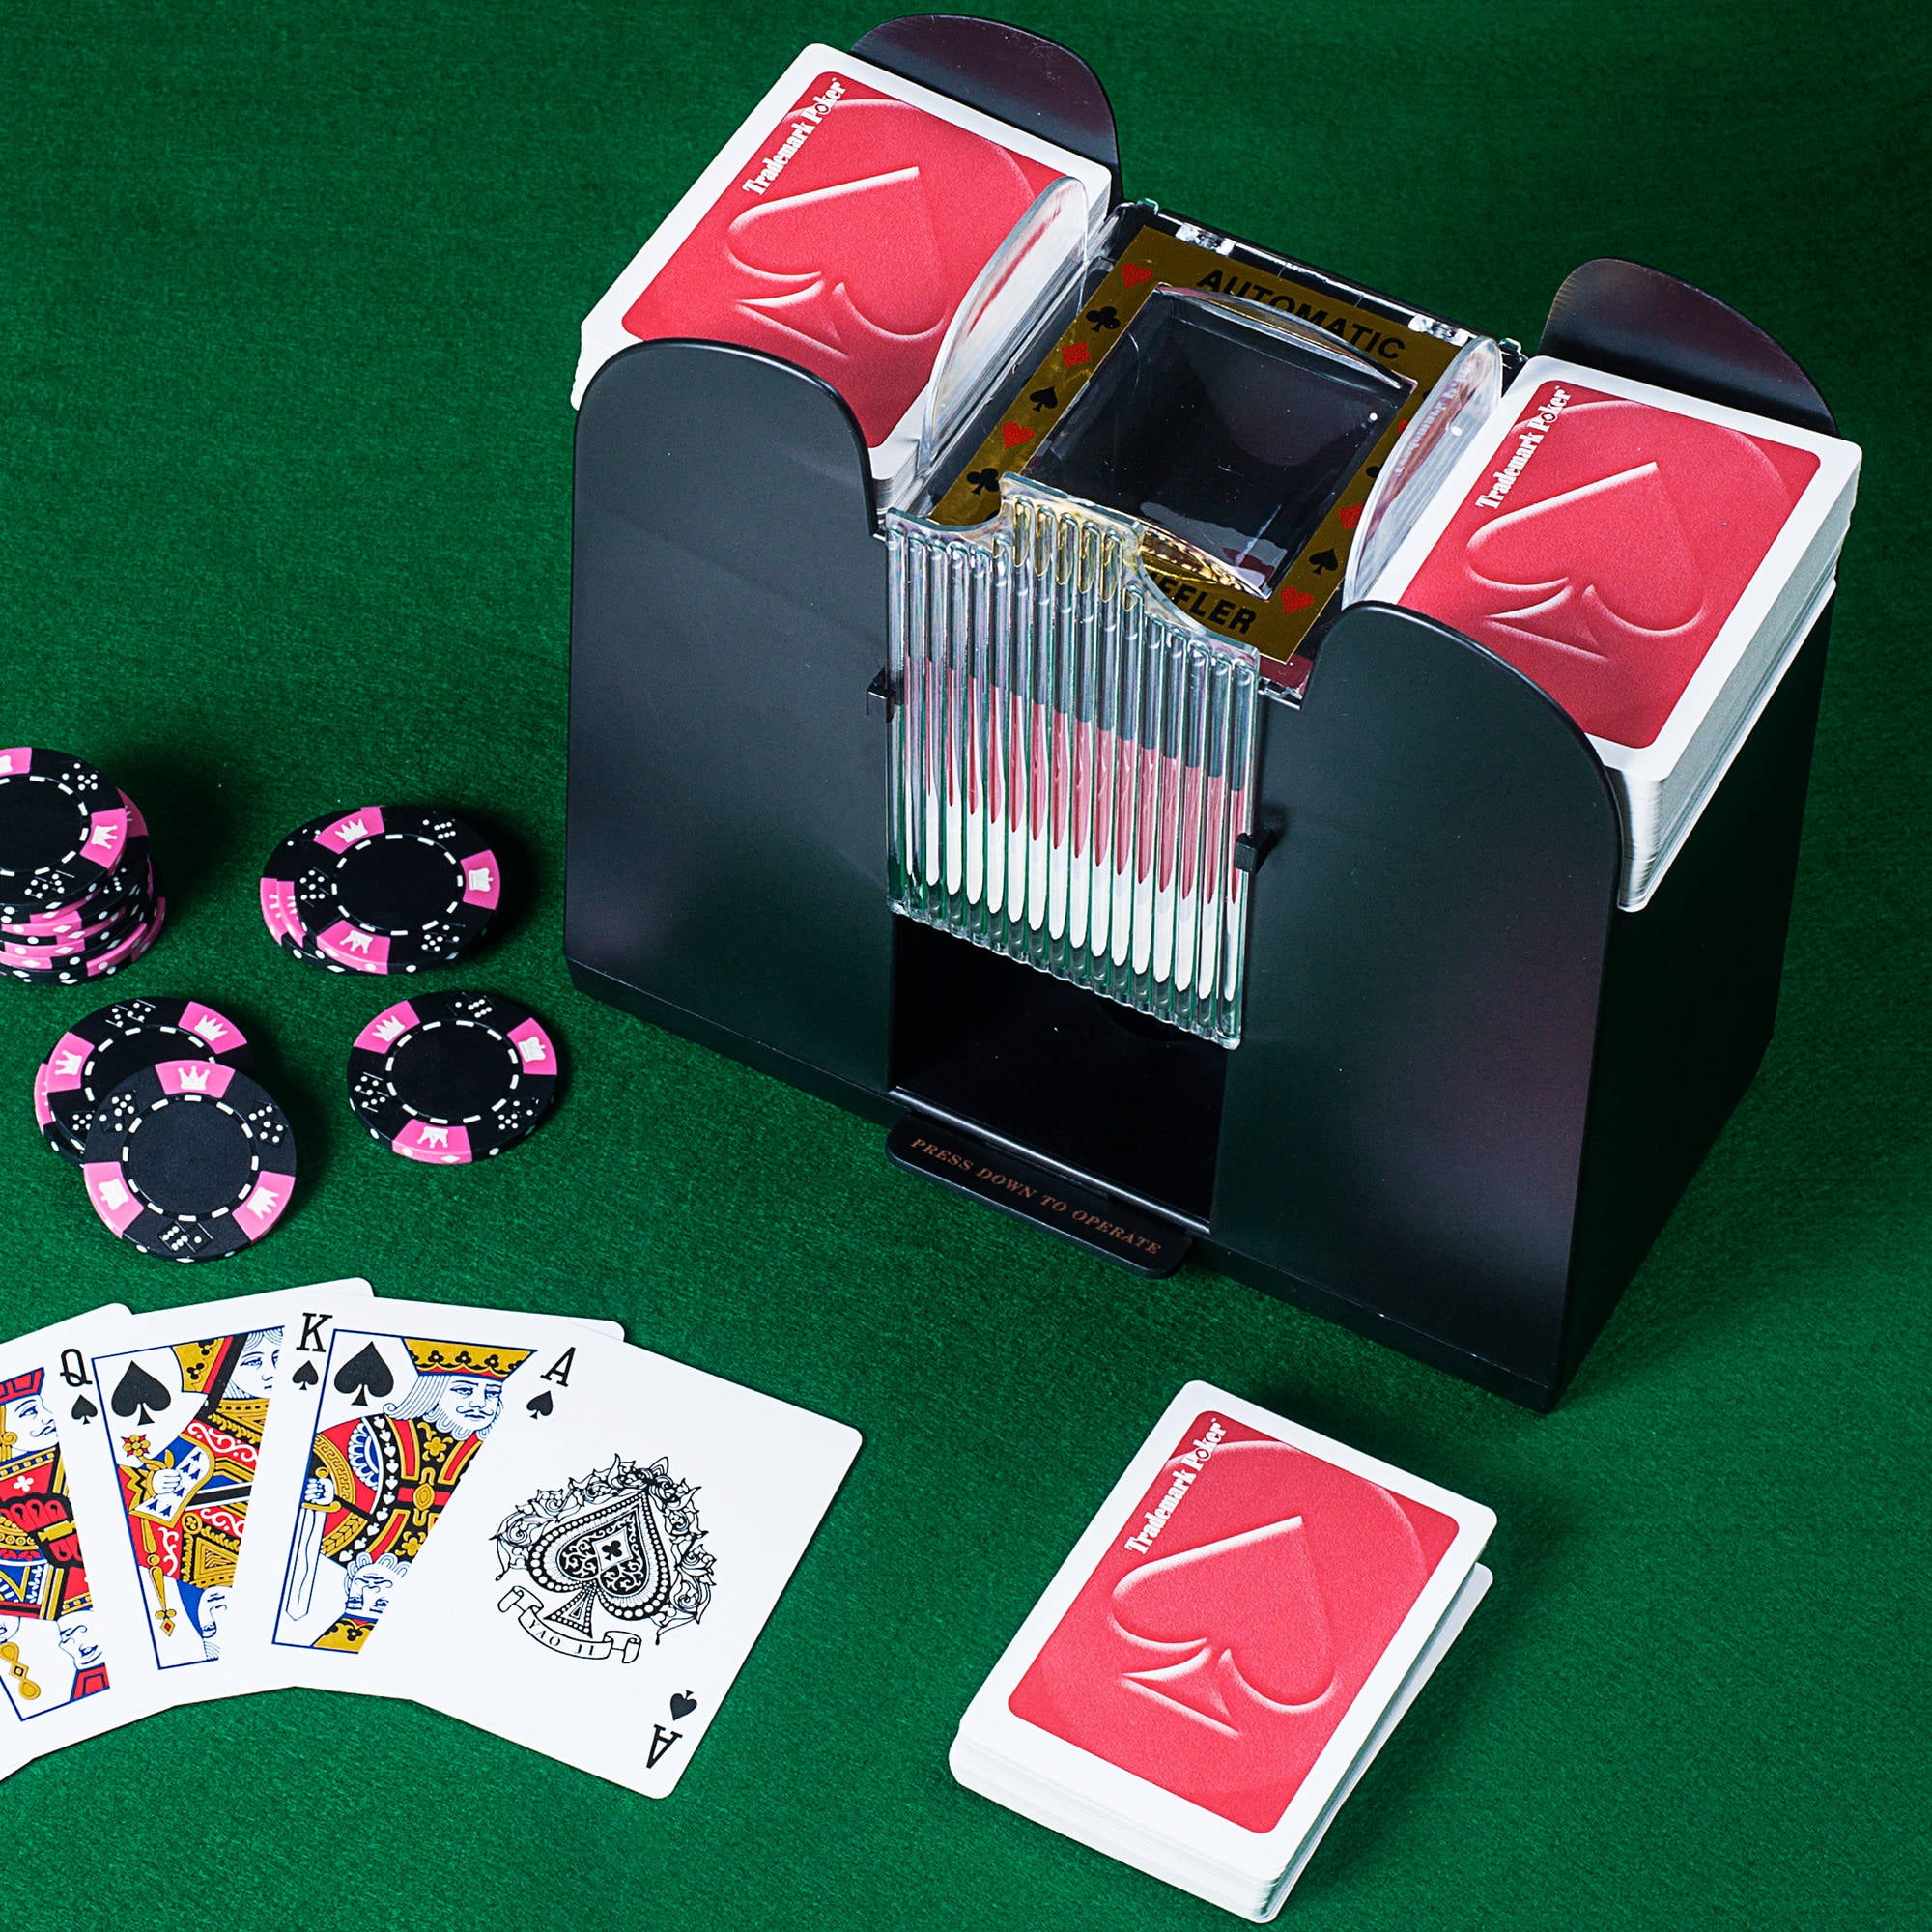 Bridge Game Blackjack Rummy Cggood Automatic Card Shuffler Electronic Battery Operated Electric Poker Shuffling Machine Tool for Home Card Games